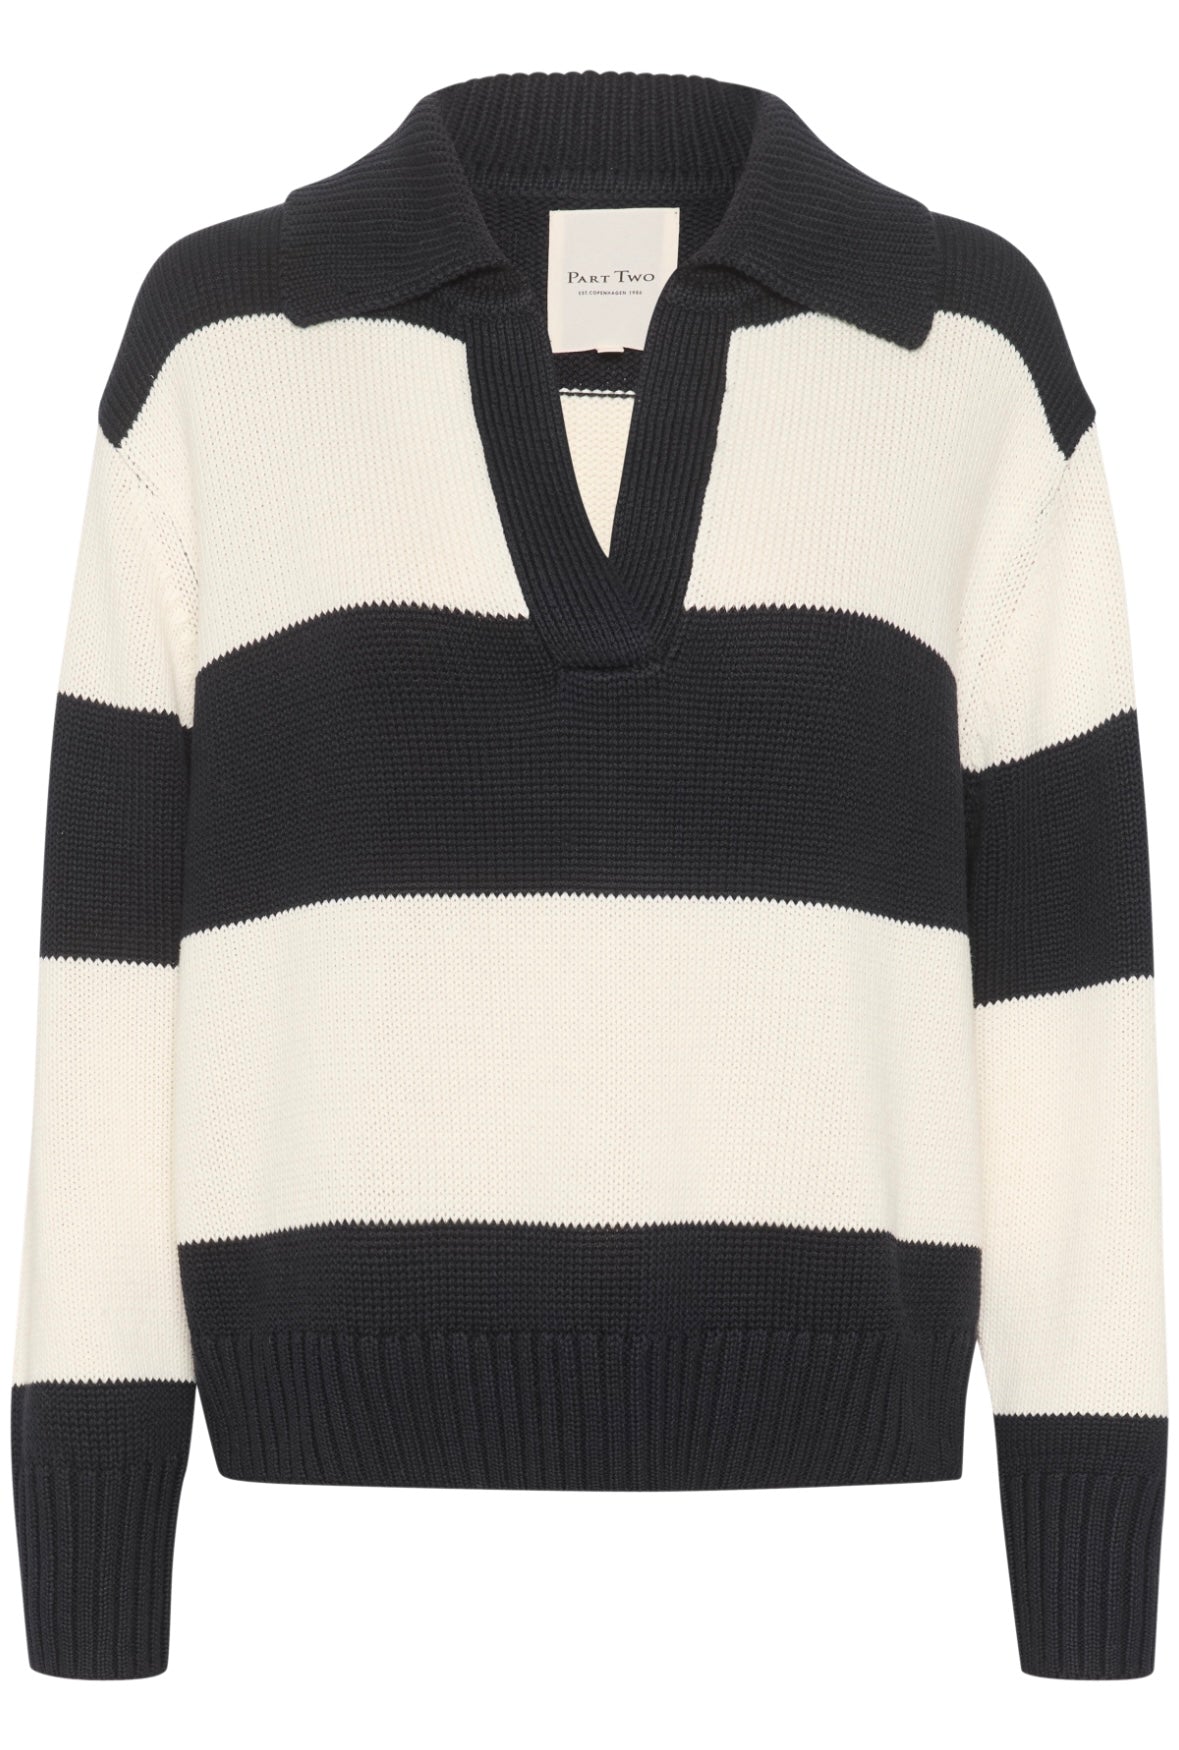 Part Two Elinda sweater - Dark Navy Bold Stripe